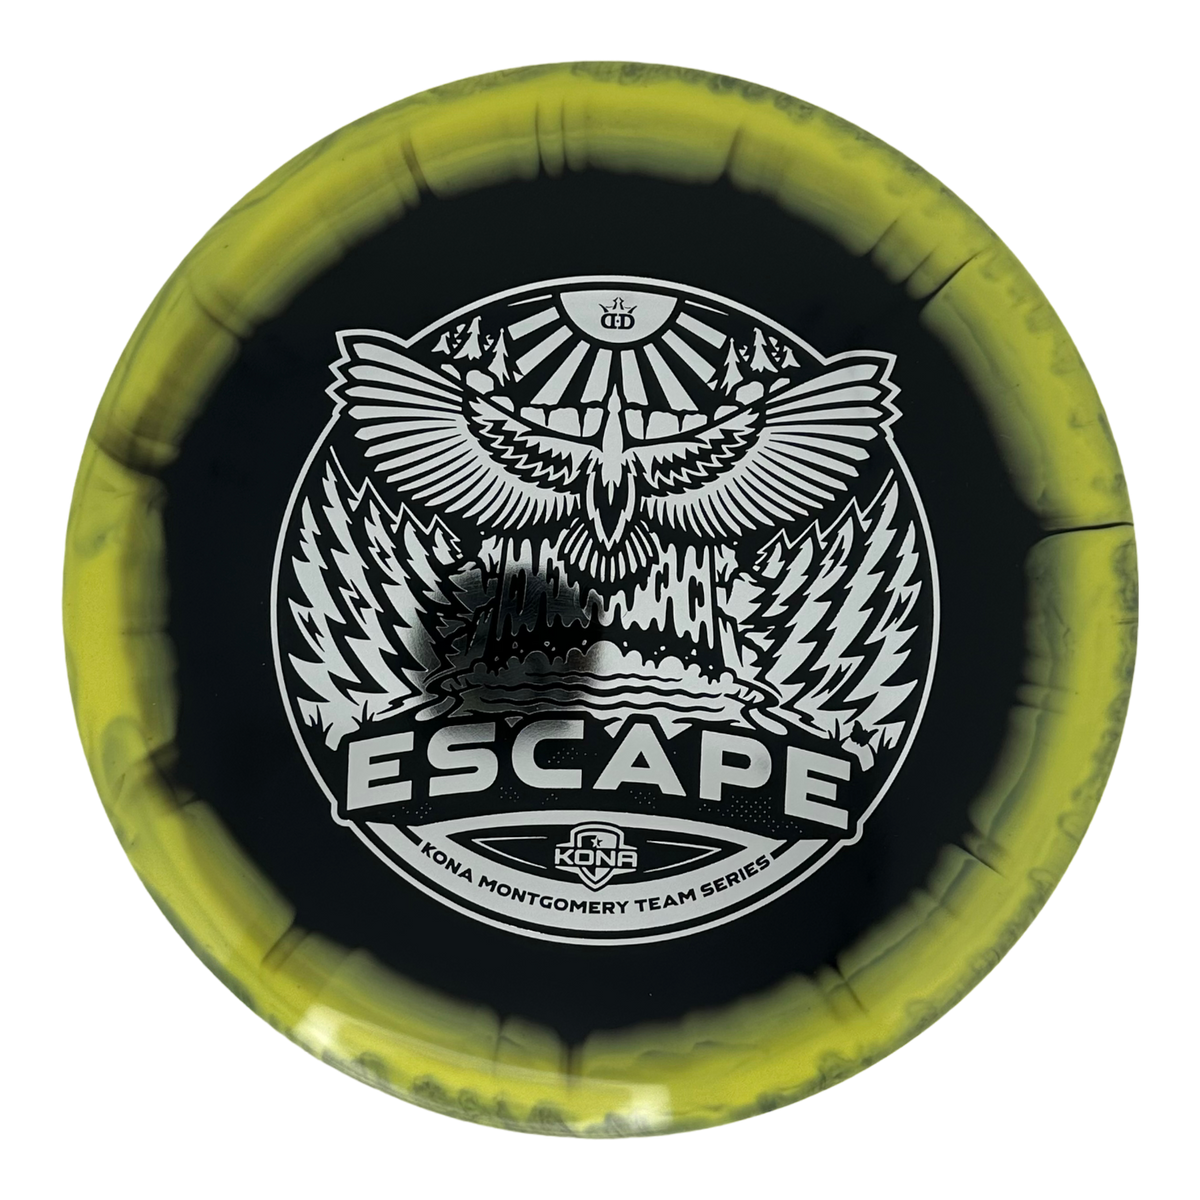 Dynamic Discs Fuzion Orbit Escape - Kona Montgomery (2023)